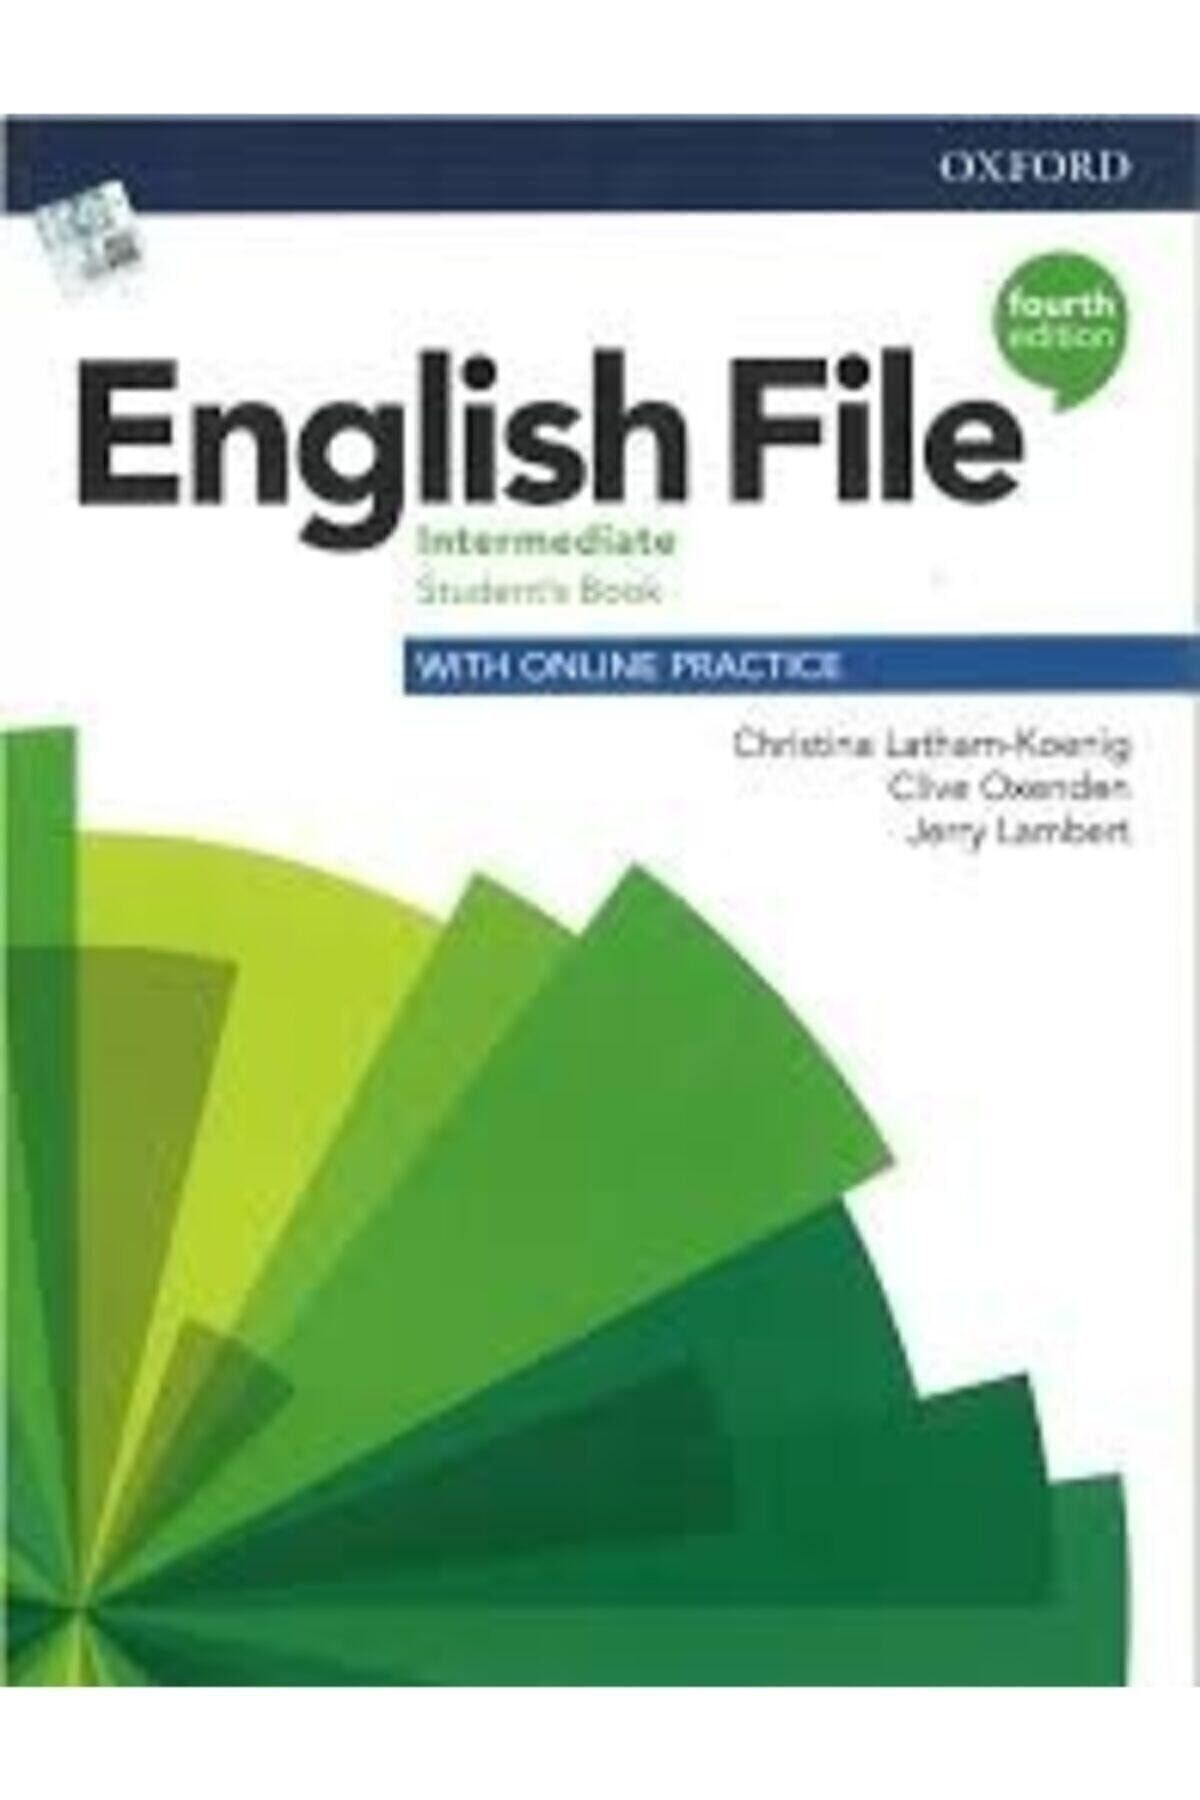 Oxford English File Intermediate Student's Book + Workbook + 4th Ed.